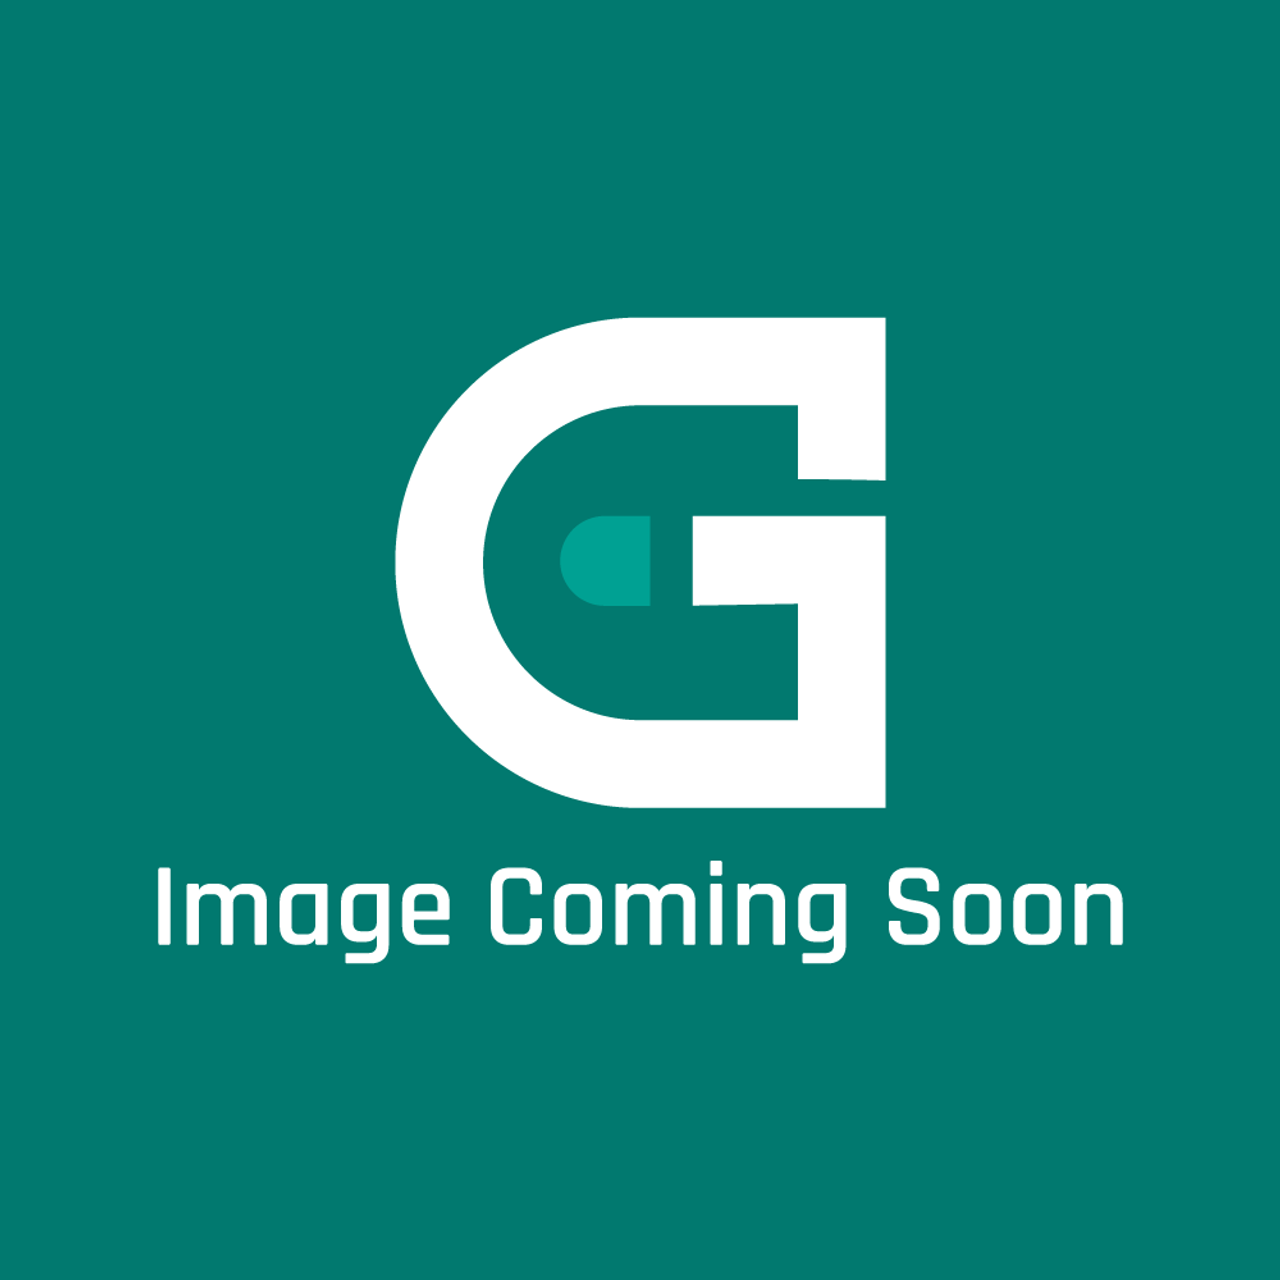 GE Appliances WB02T10166 - Spacer Frt Trim (Blk) - Image Coming Soon!